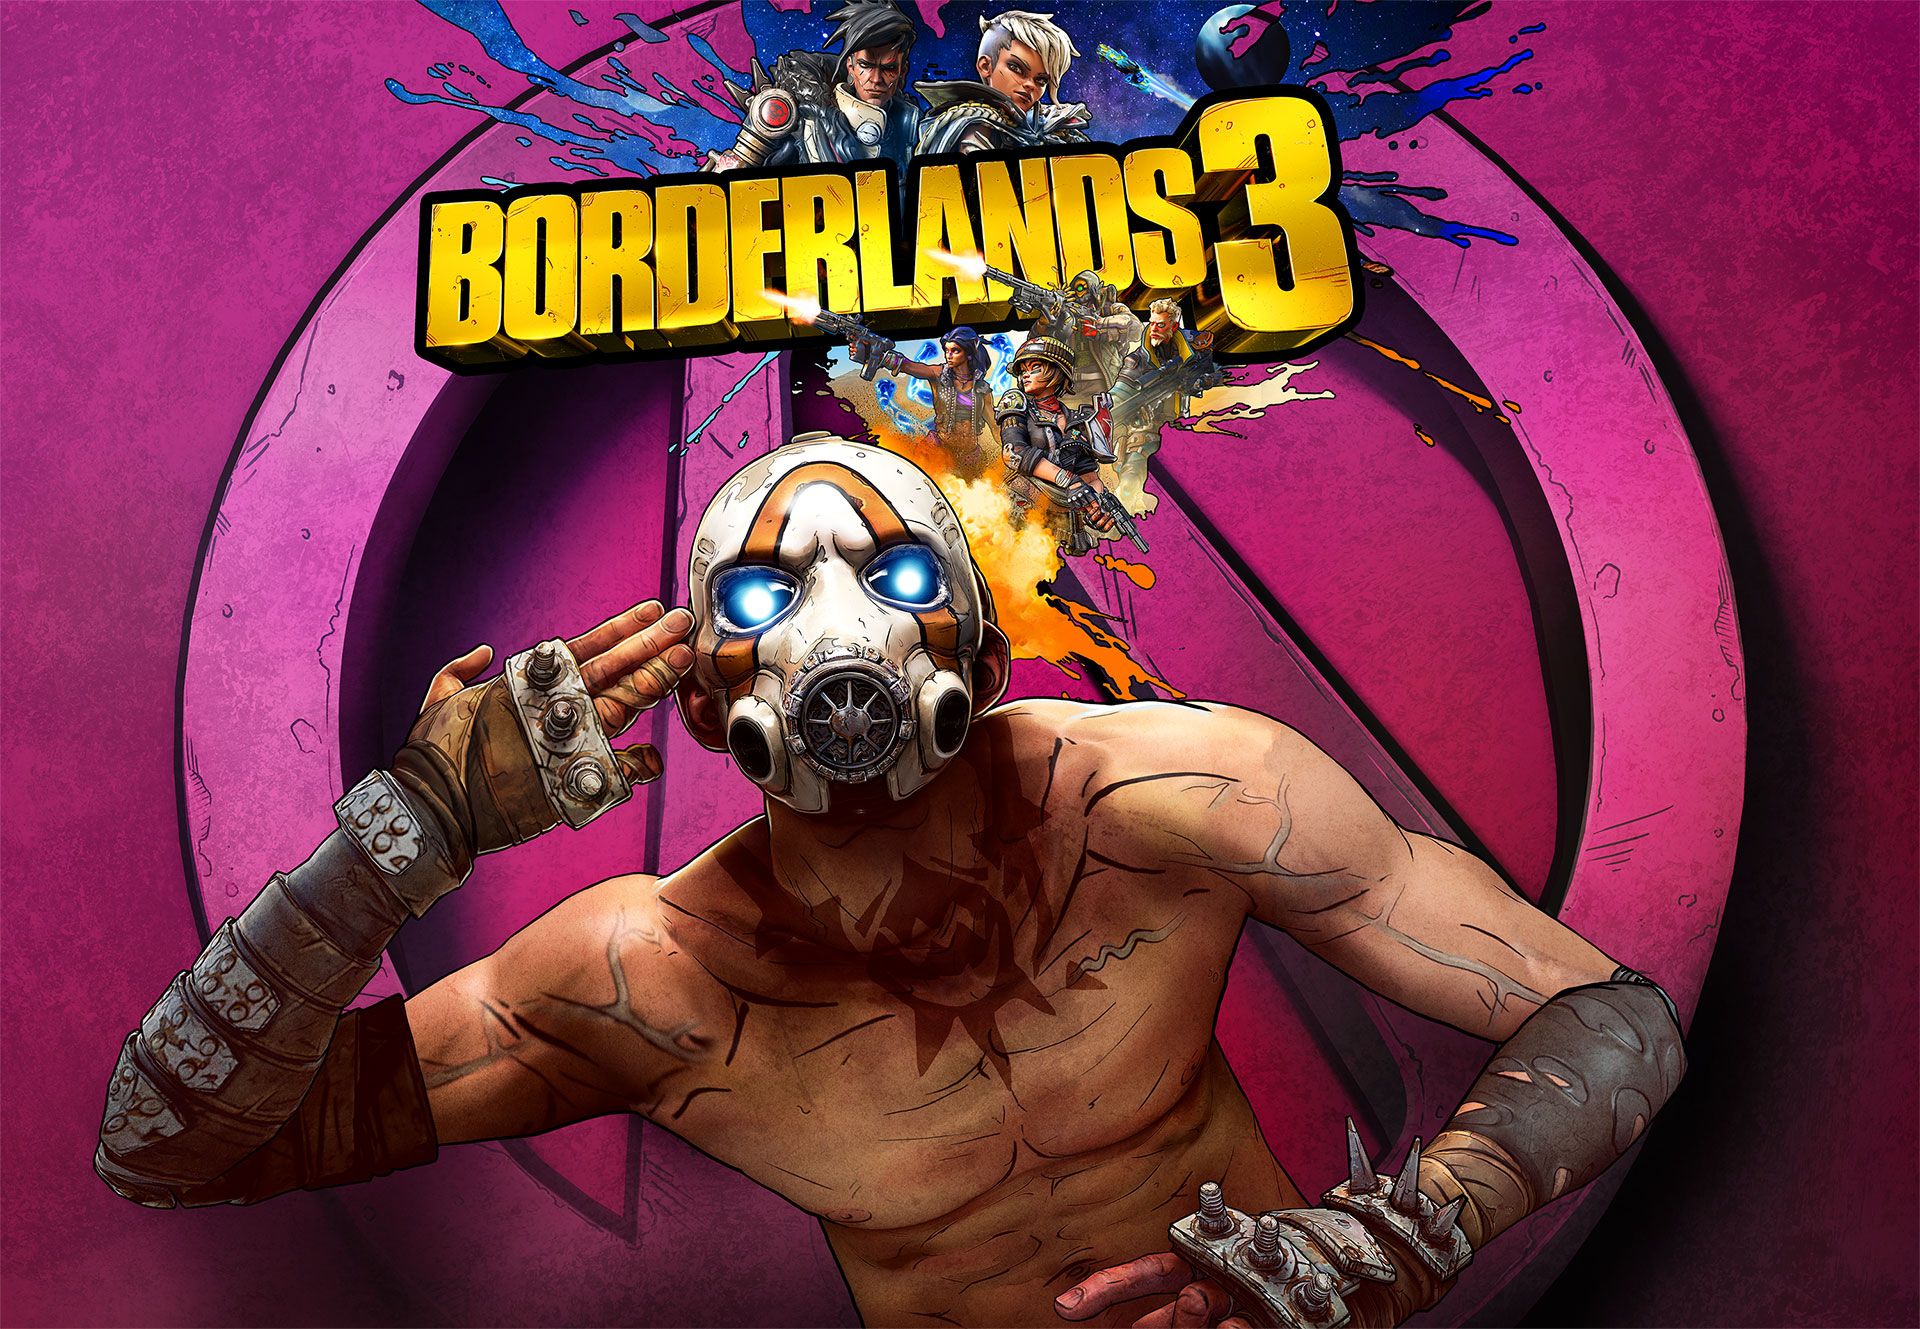 HOTお買い得設定資料集 The Art of Borderlands 2 ボーダーランズ2 ゲーム設定資料集